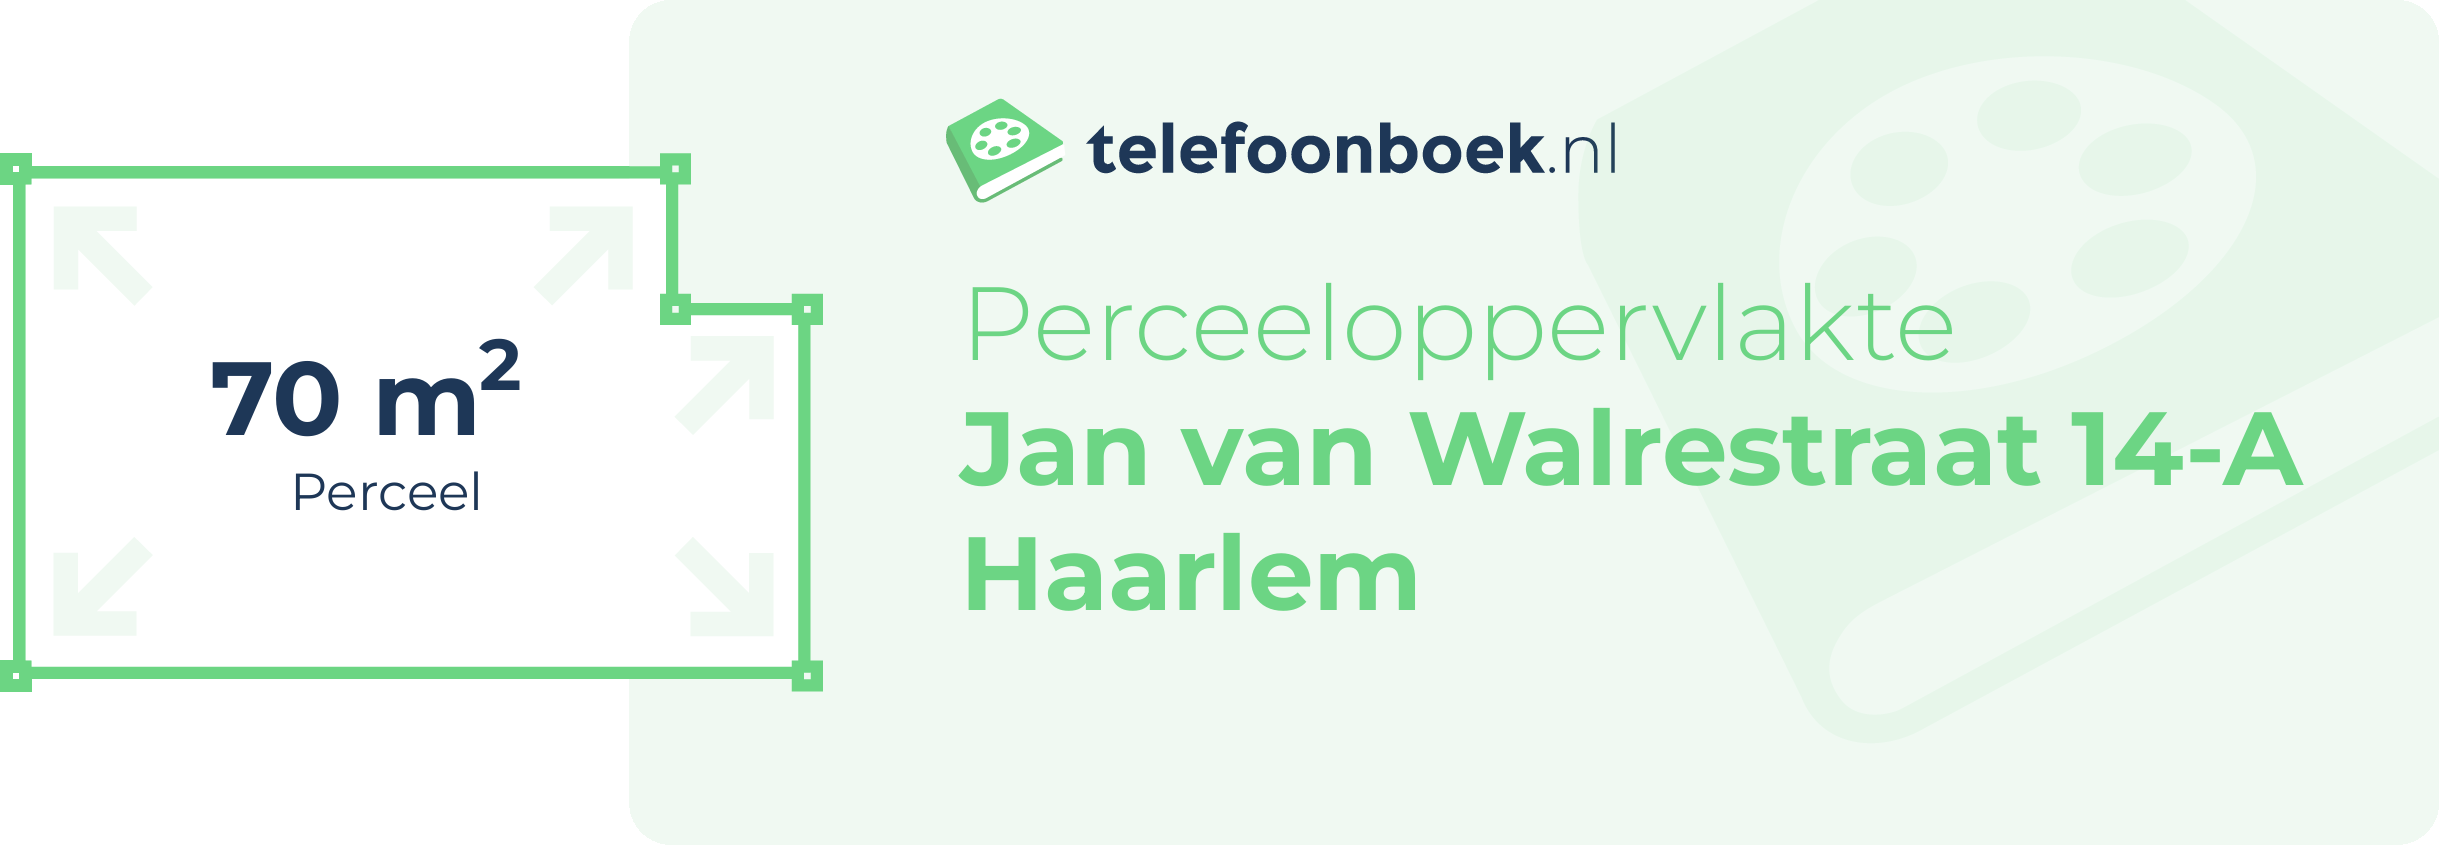 Perceeloppervlakte Jan Van Walrestraat 14-A Haarlem